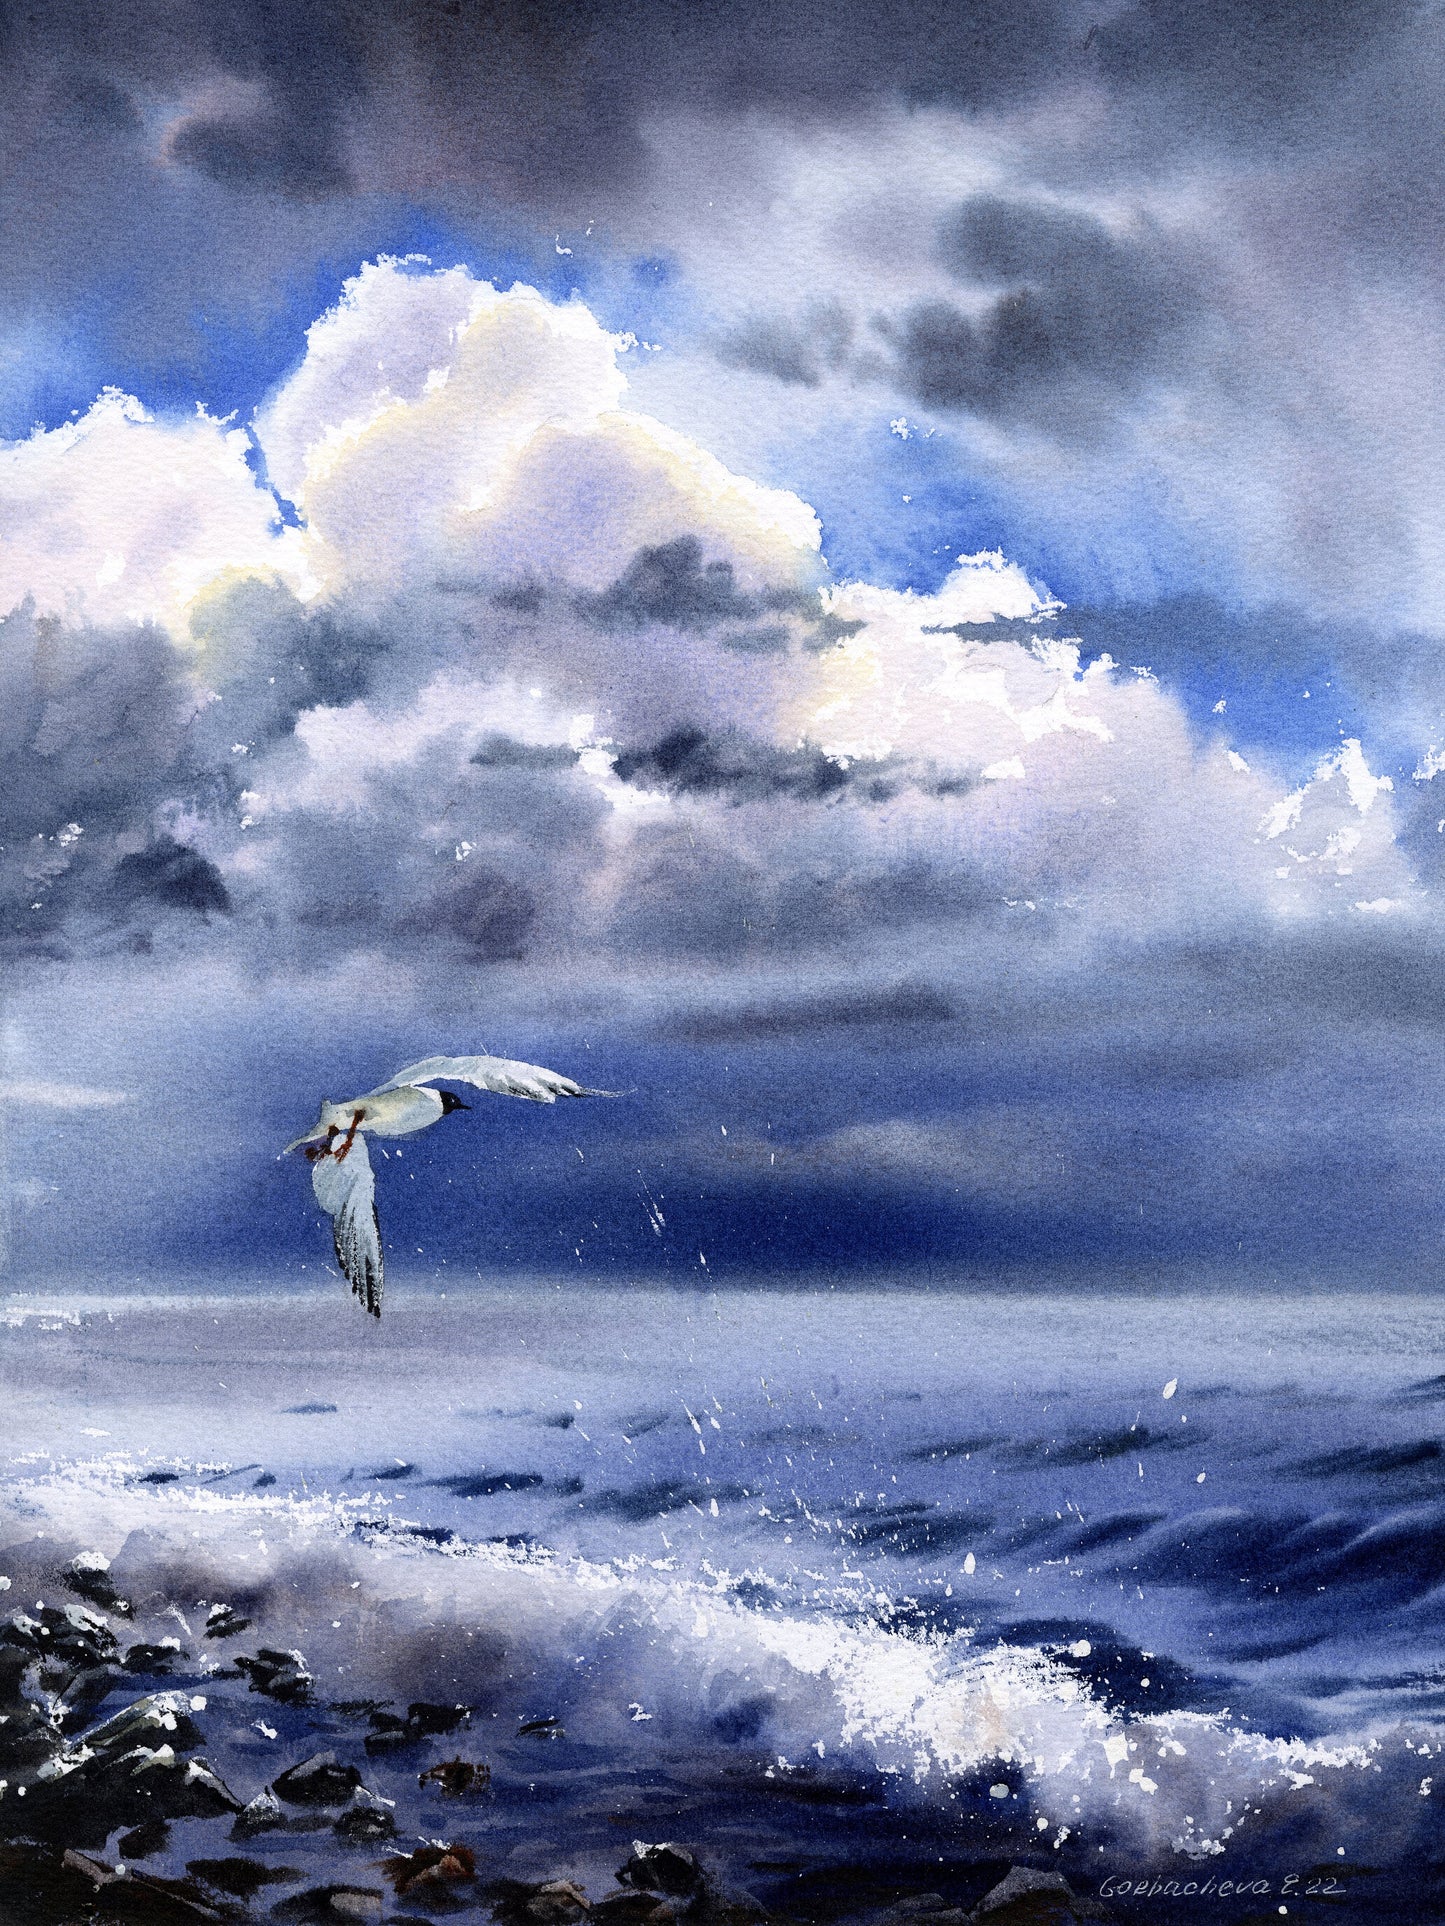 Watercolor Seagull Print, Coastal Wall Decor, Sea Large Painting, Blue Wave Rocks, Bird Art Giclée Fine Art Canvas Print